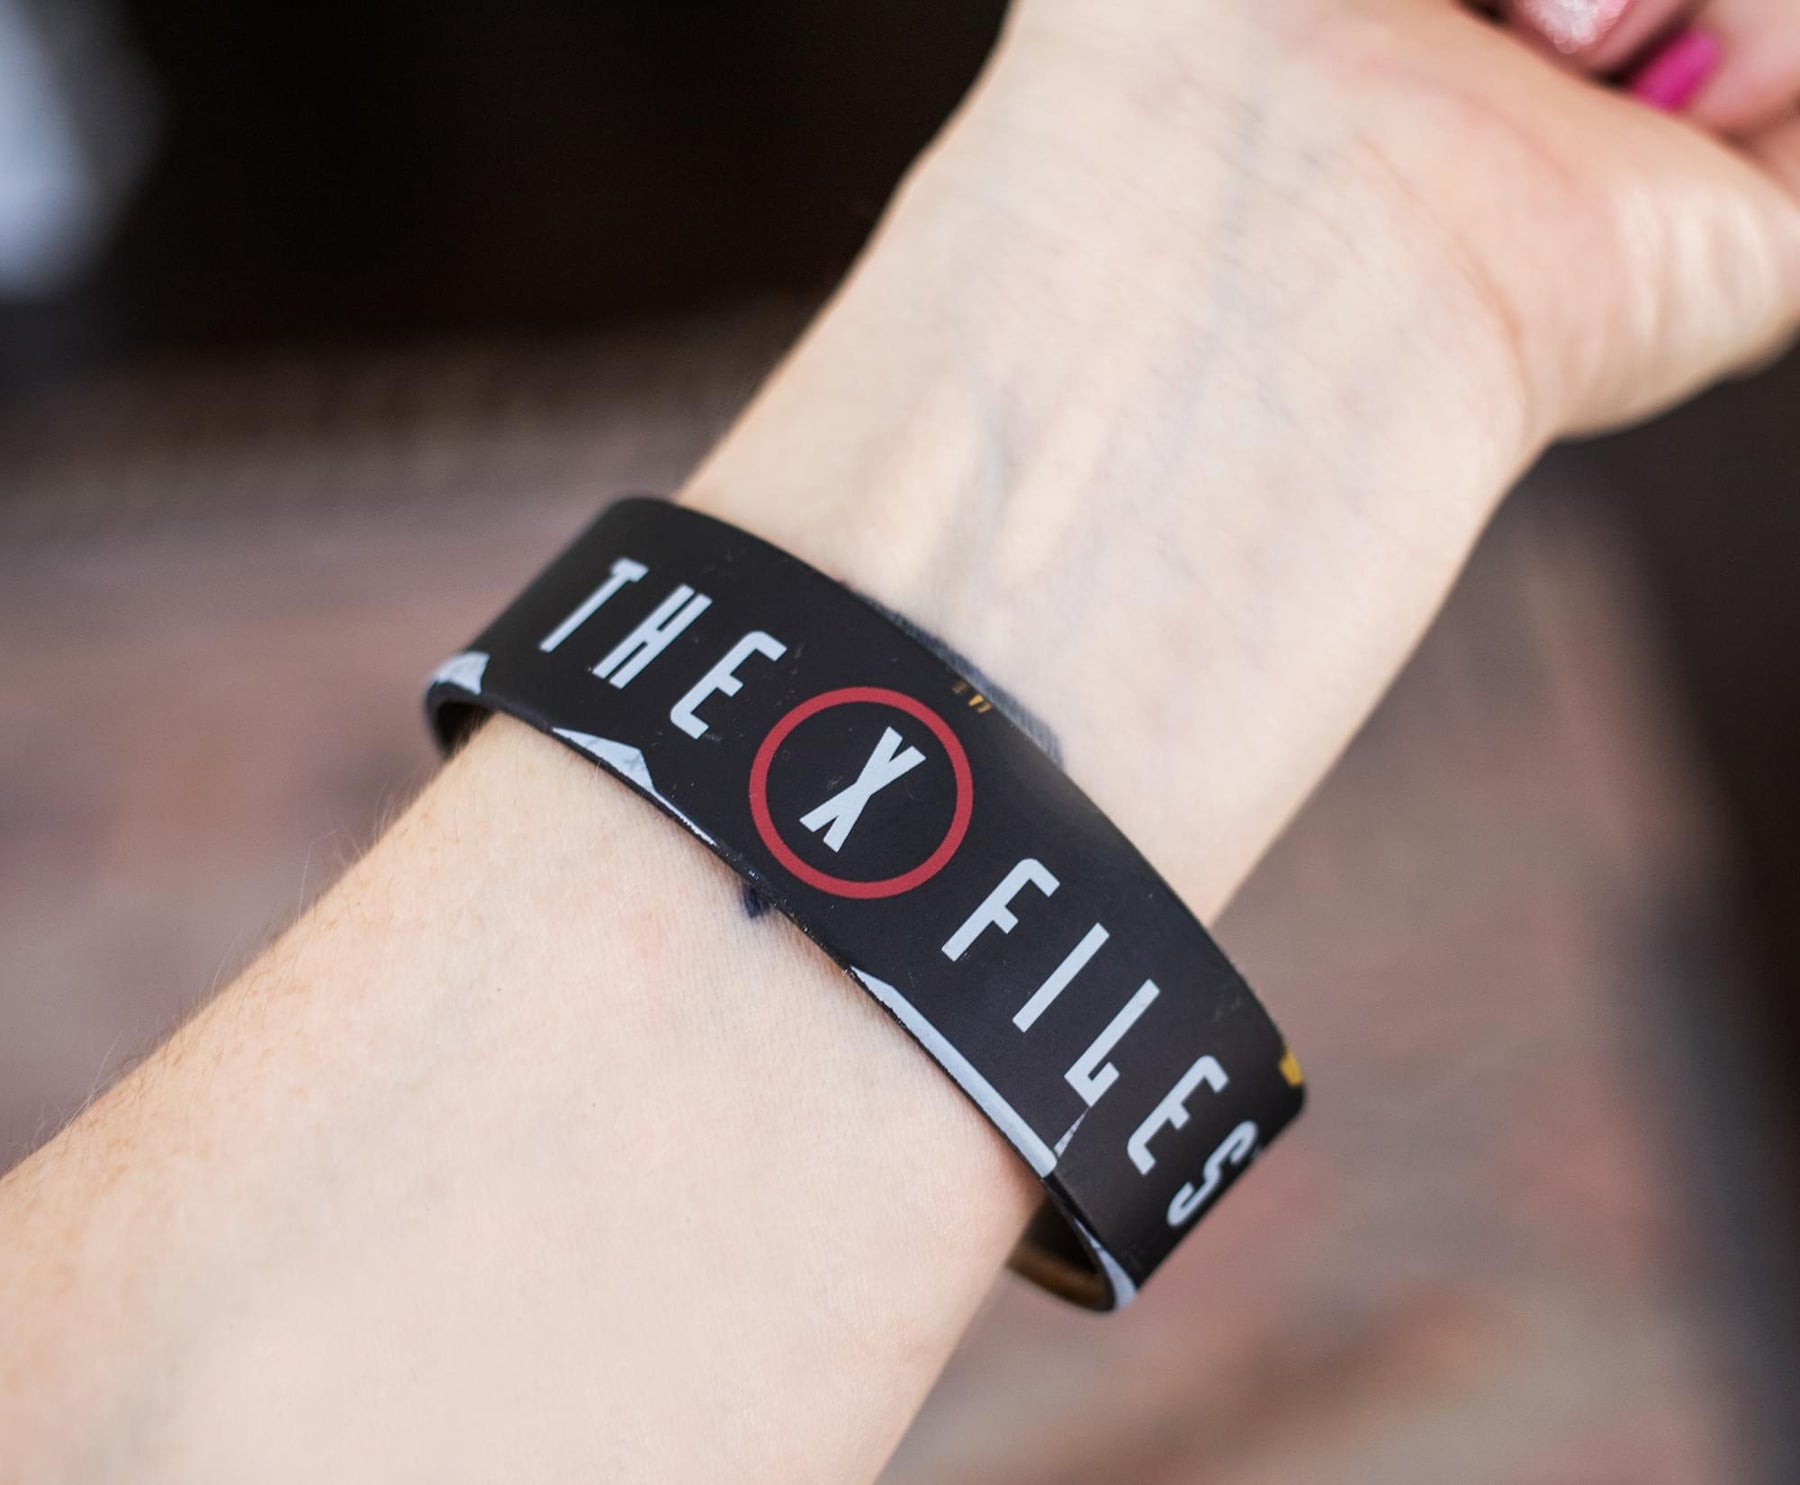 The X Files Logo Rubber Wristband